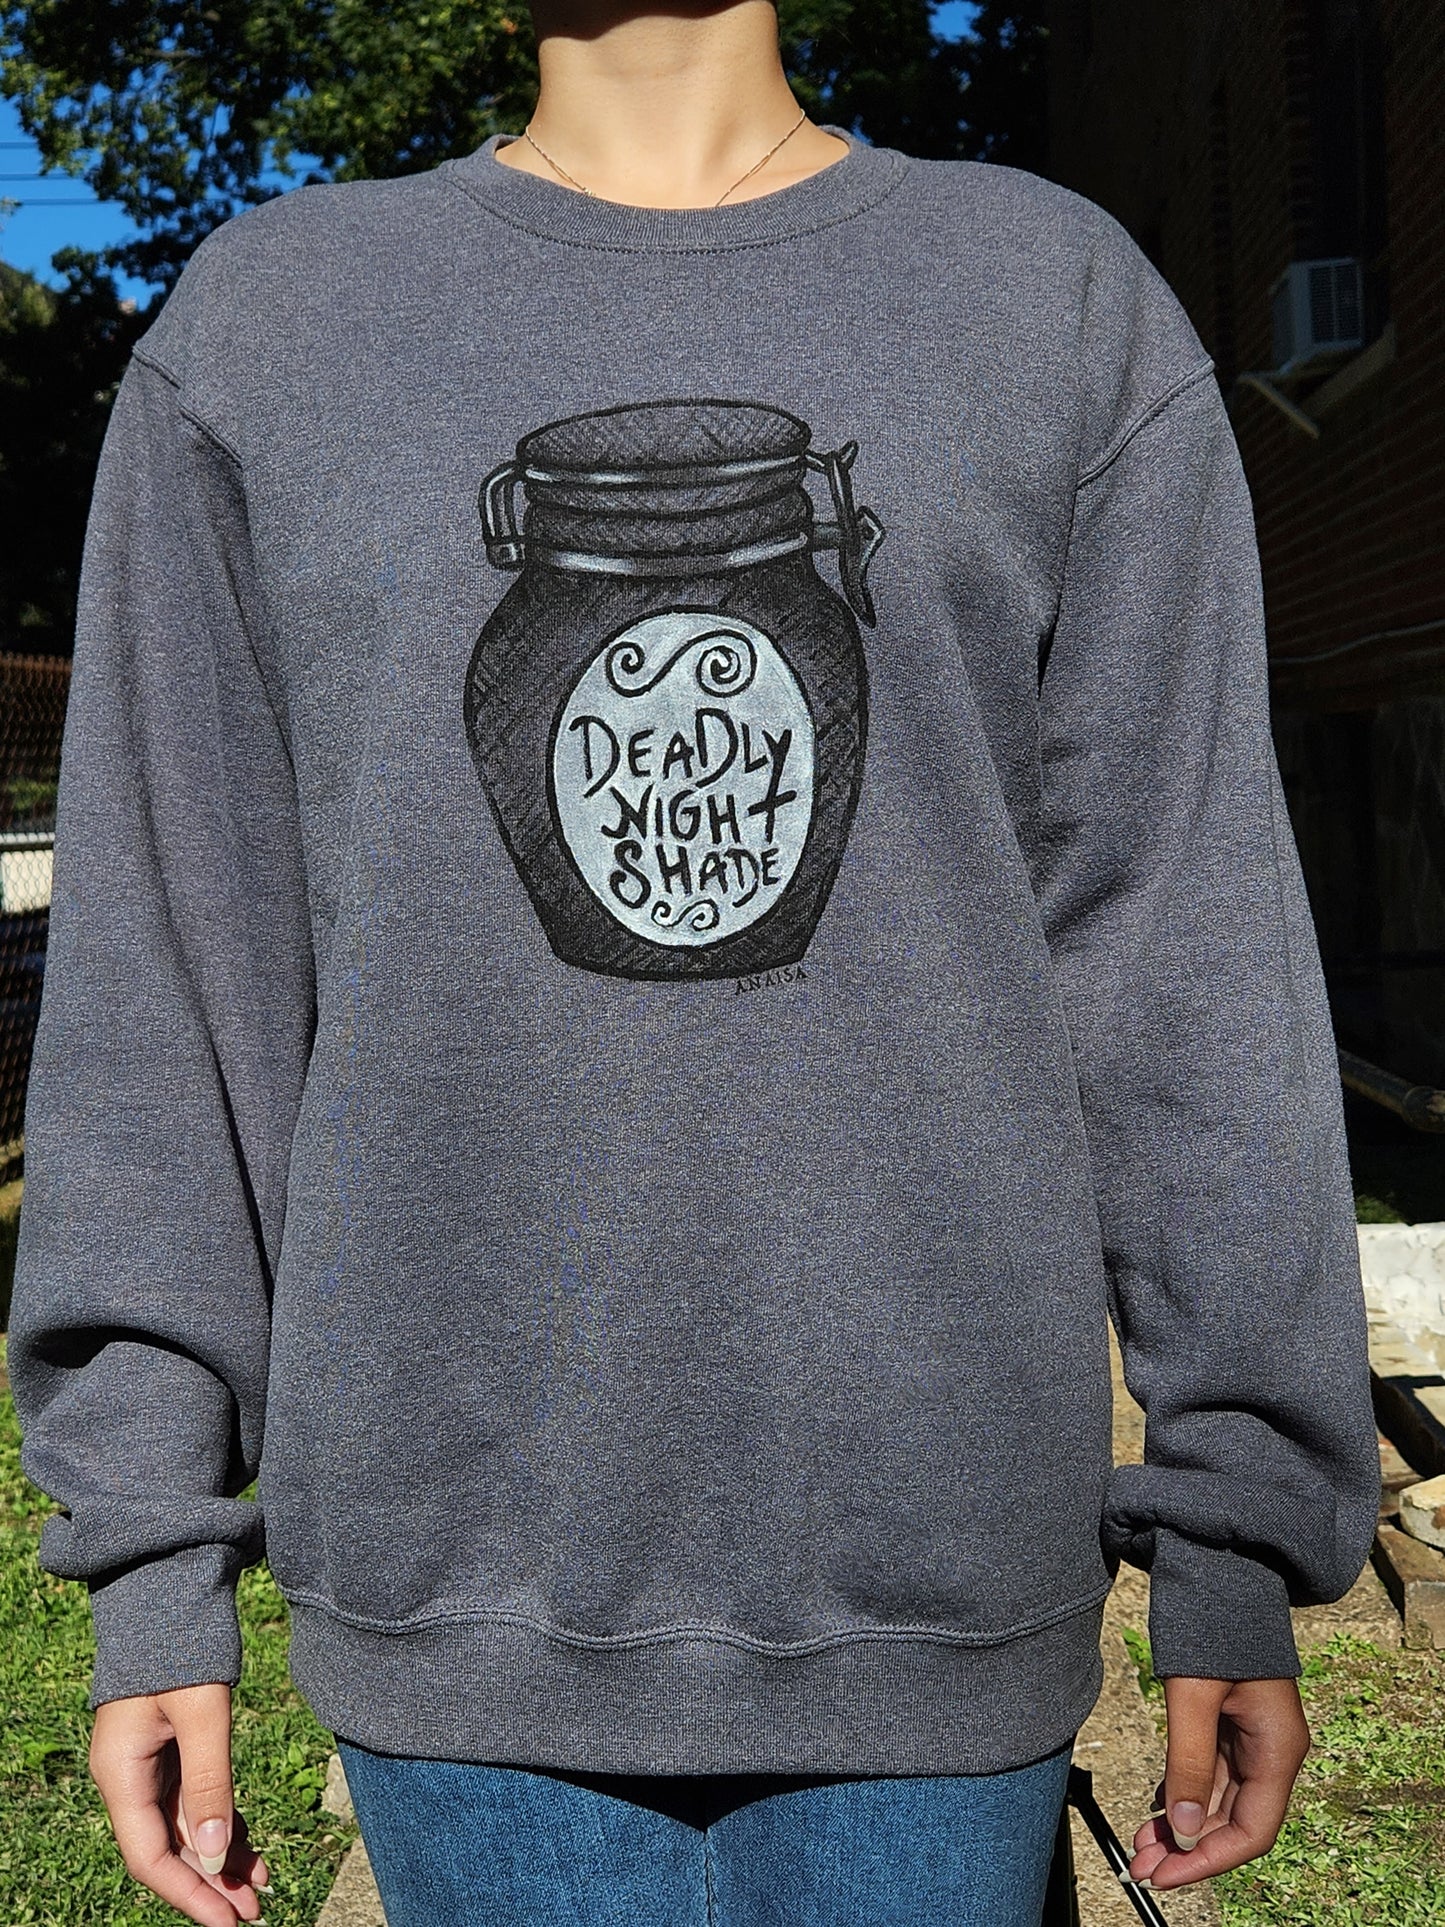 Deadly Night Shade Sweatshirt